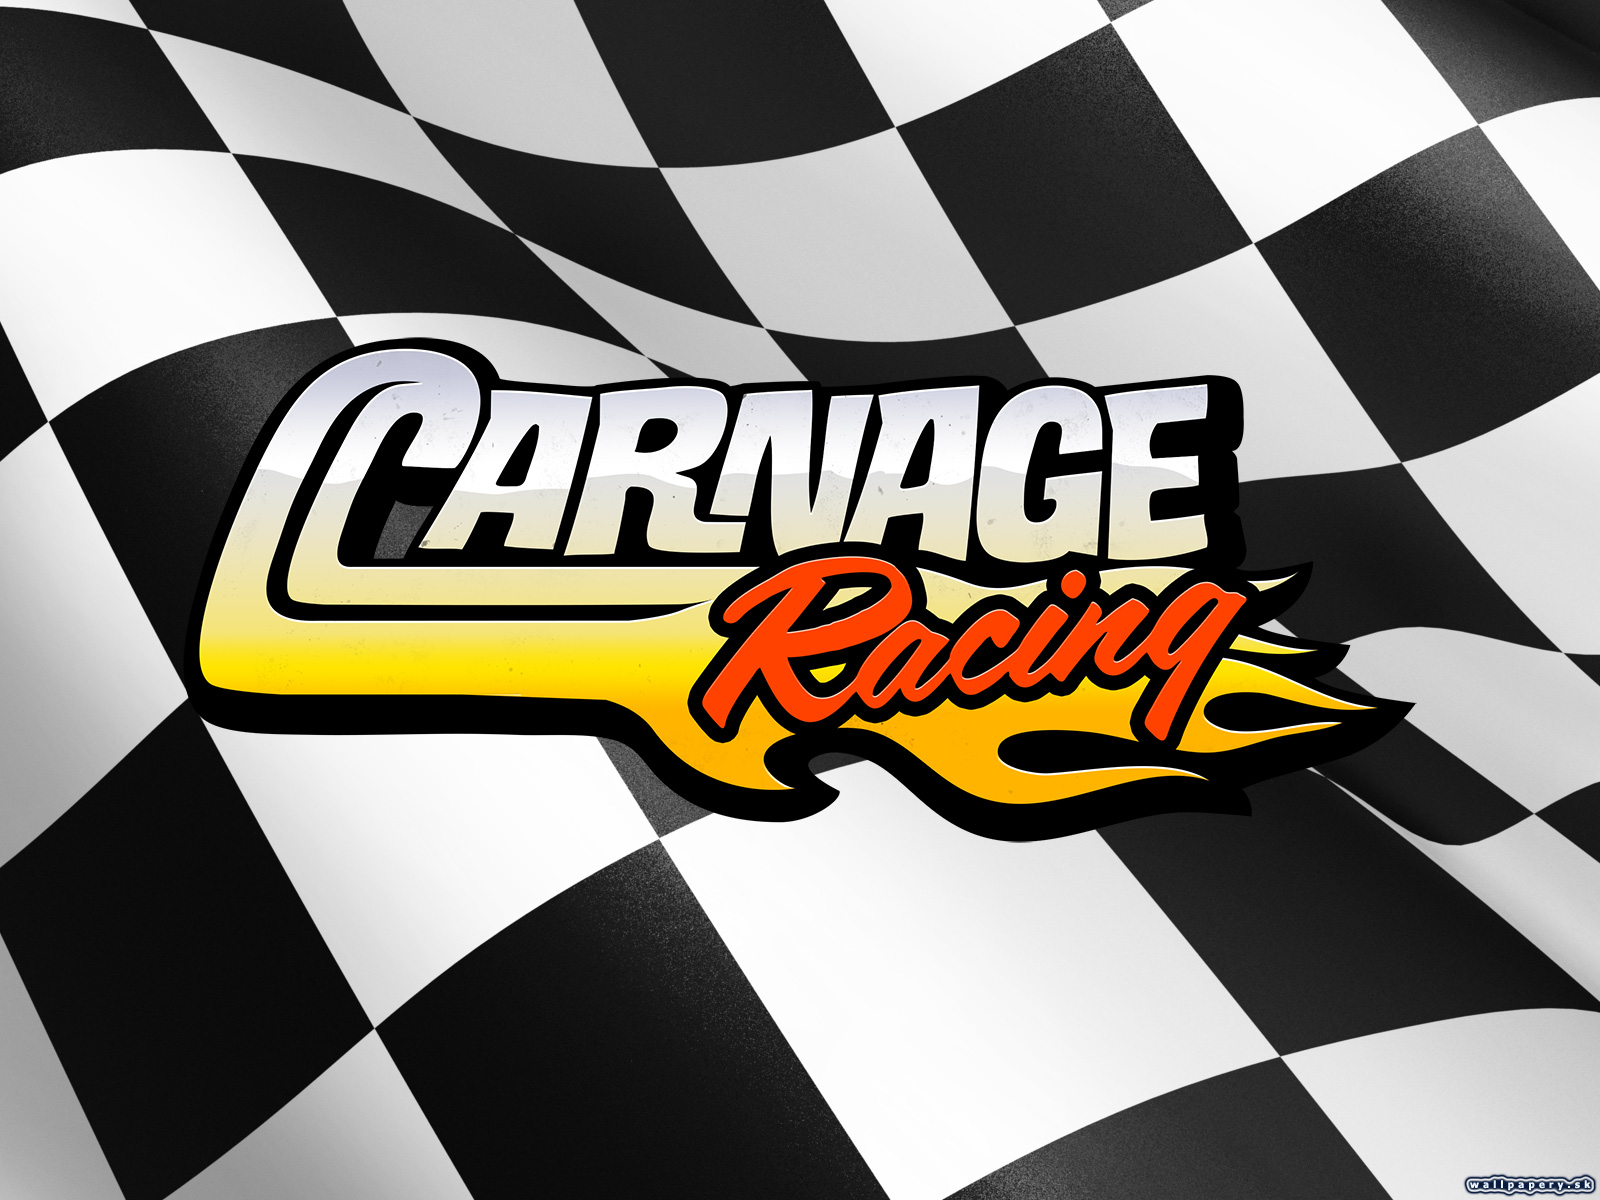 Carnage Racing - wallpaper 2